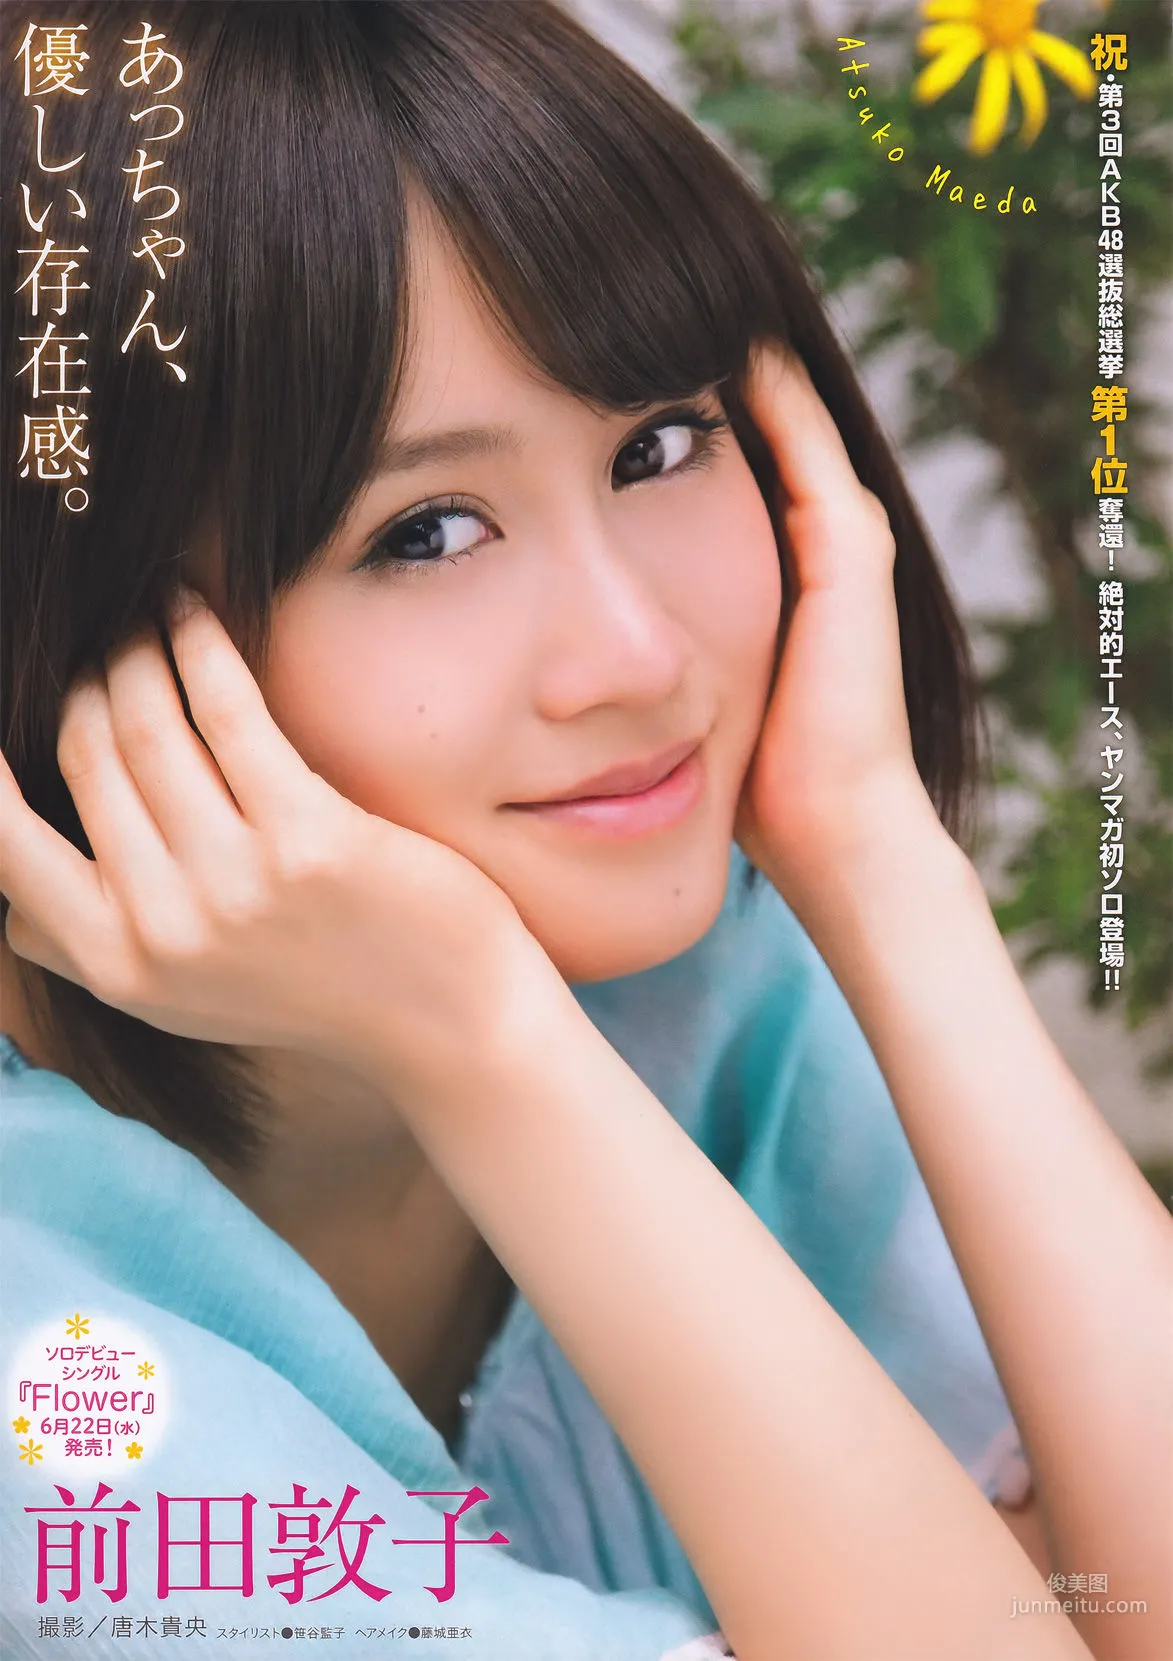 [Young Magazine] 前田敦子 Atsuko Maeda 2011年No.29 写真杂志2